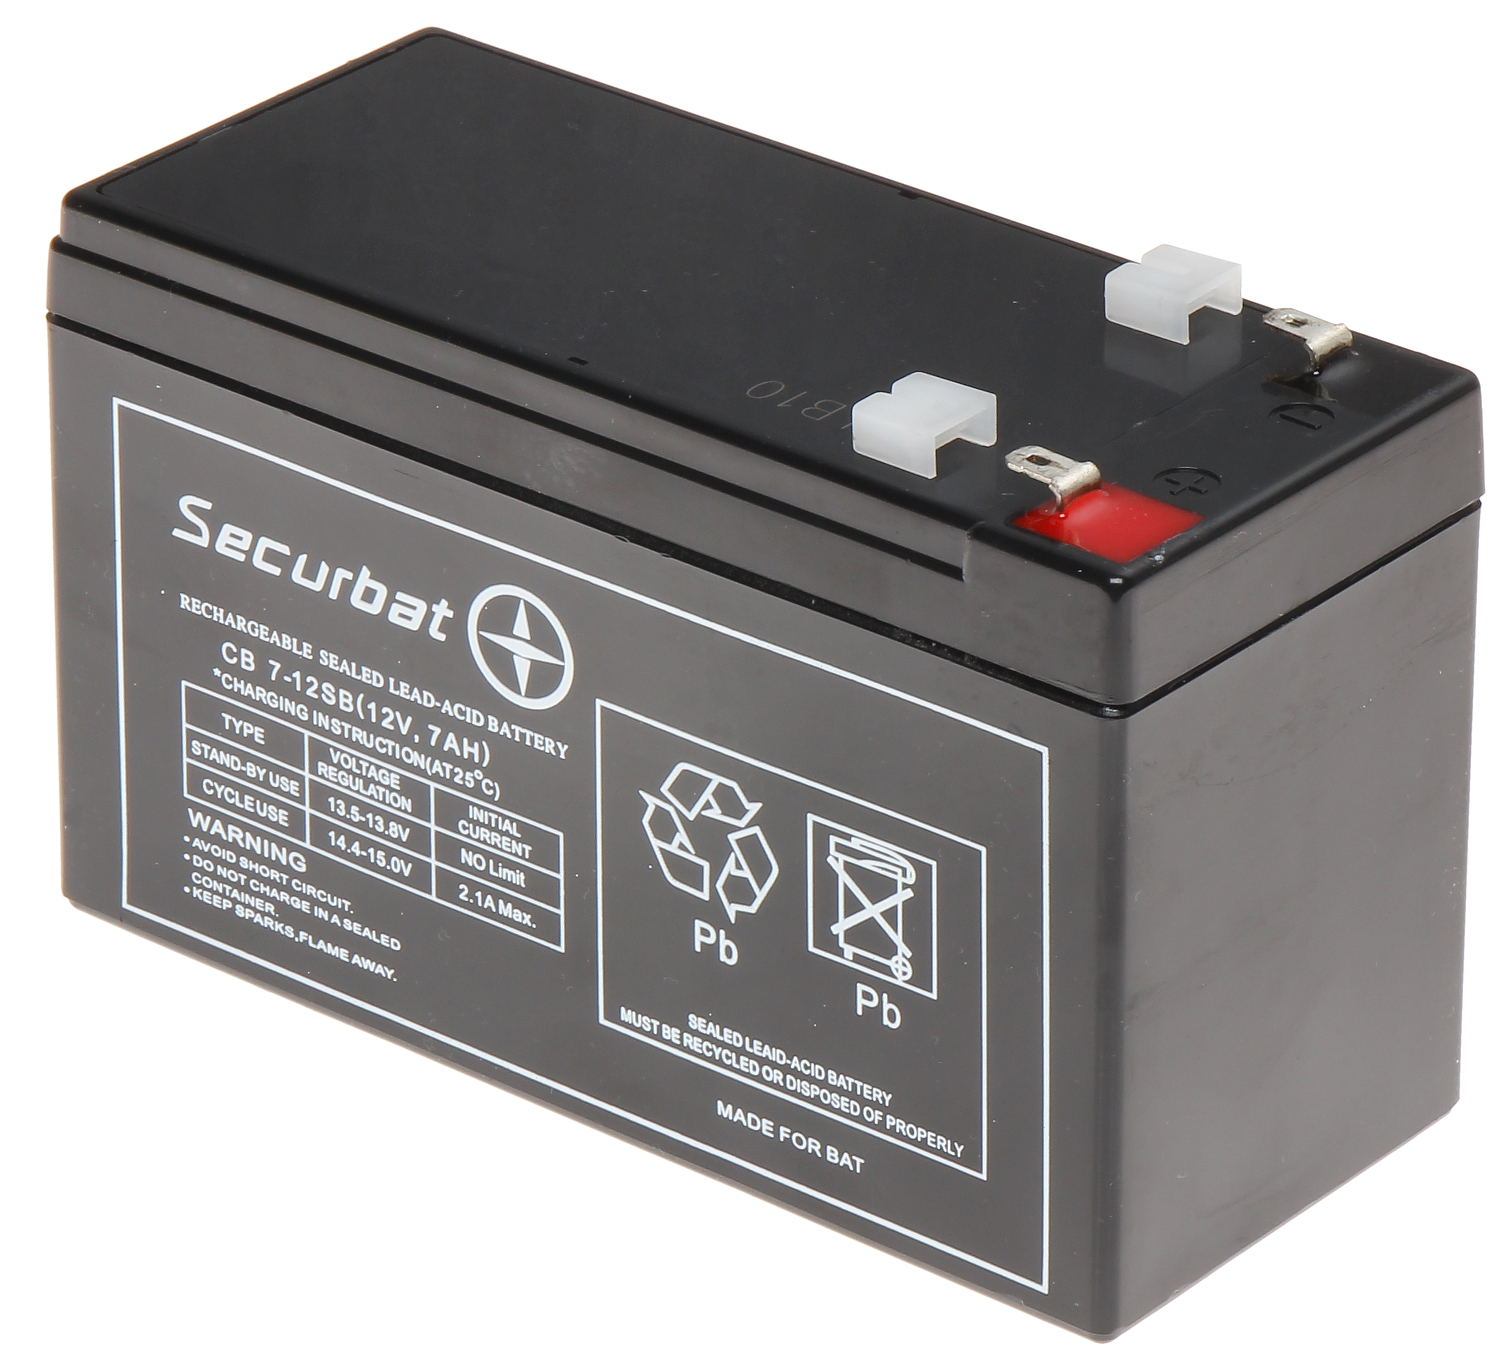 12V 7Ah Battery, Sealed Lead Acid battery (AGM), B.B. Battery BP7-12, VdS,  151x65x93 mm (LxWxH)